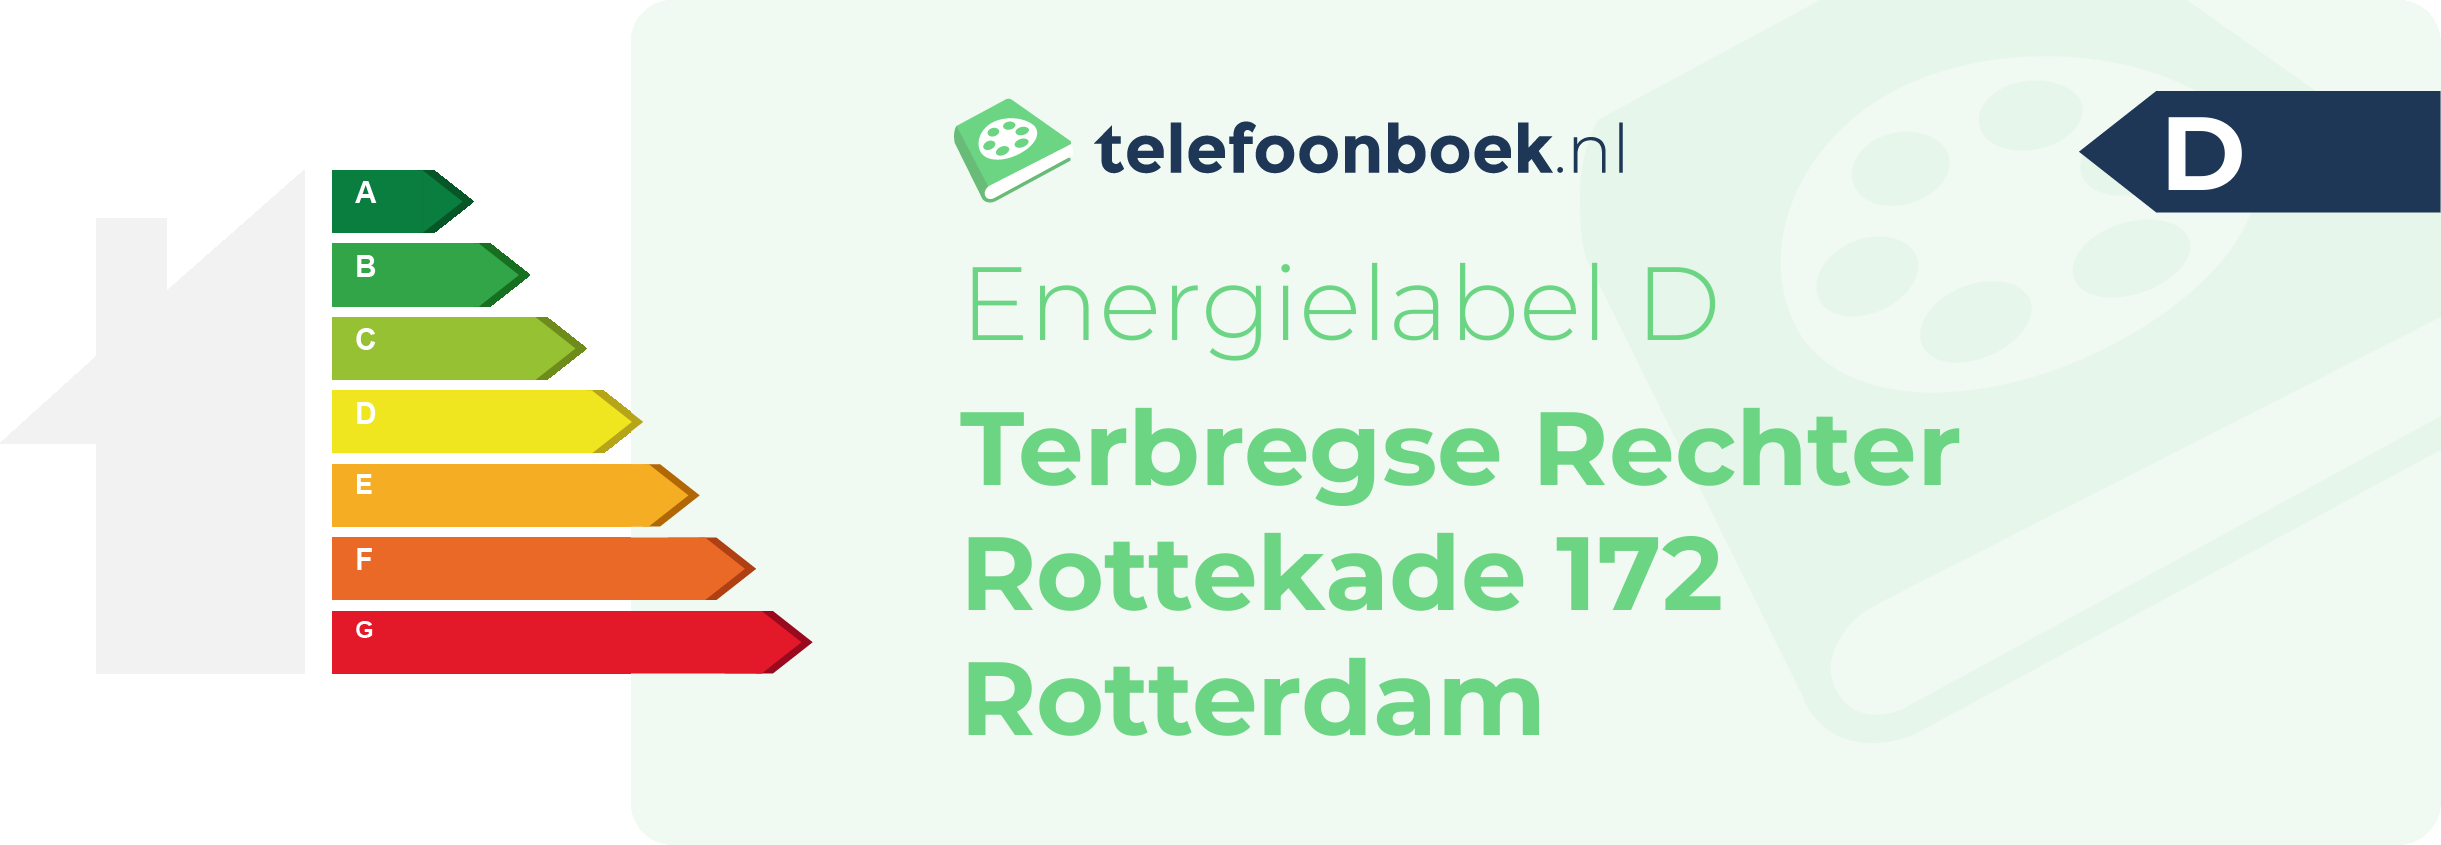 Energielabel Terbregse Rechter Rottekade 172 Rotterdam